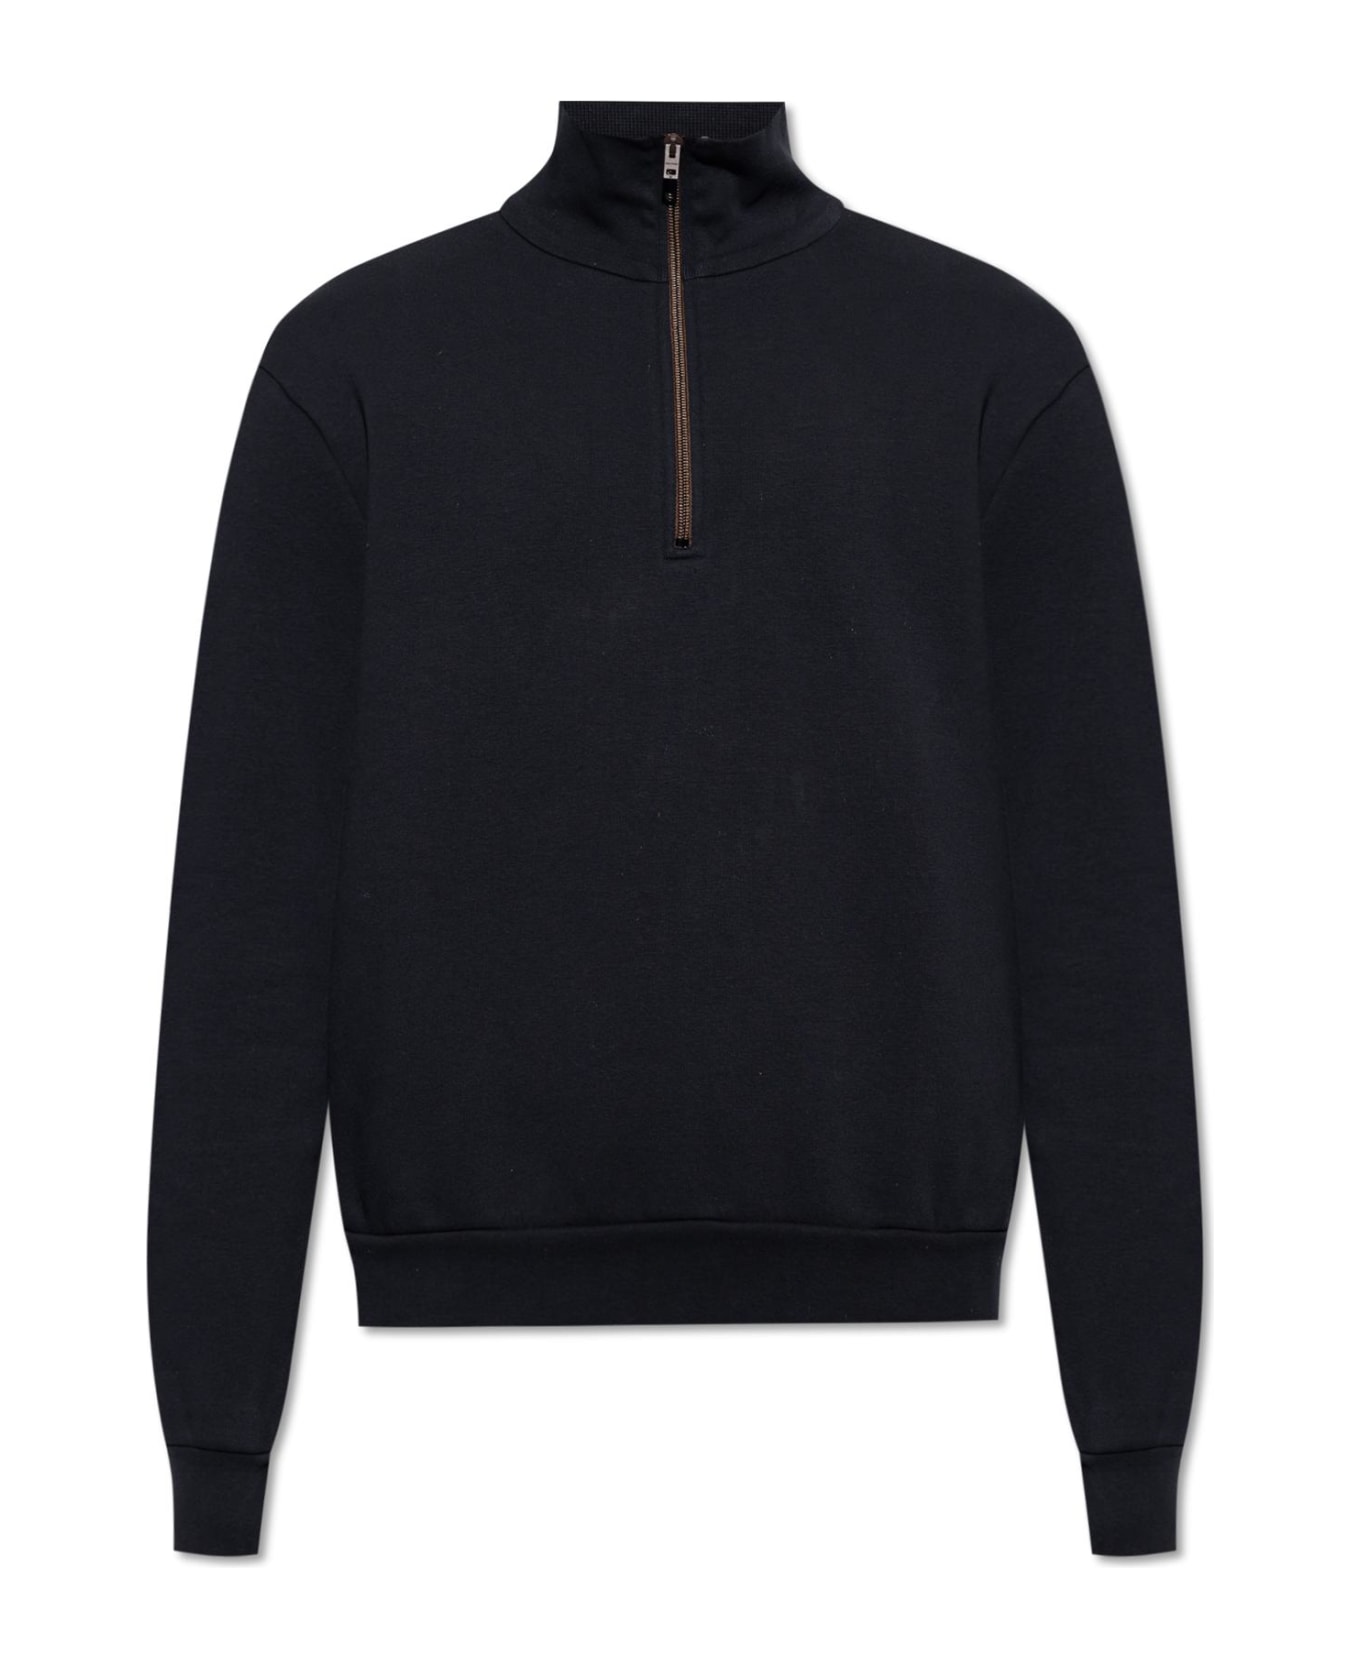 Acne Studios Sweatshirt With Standing Collar - Black